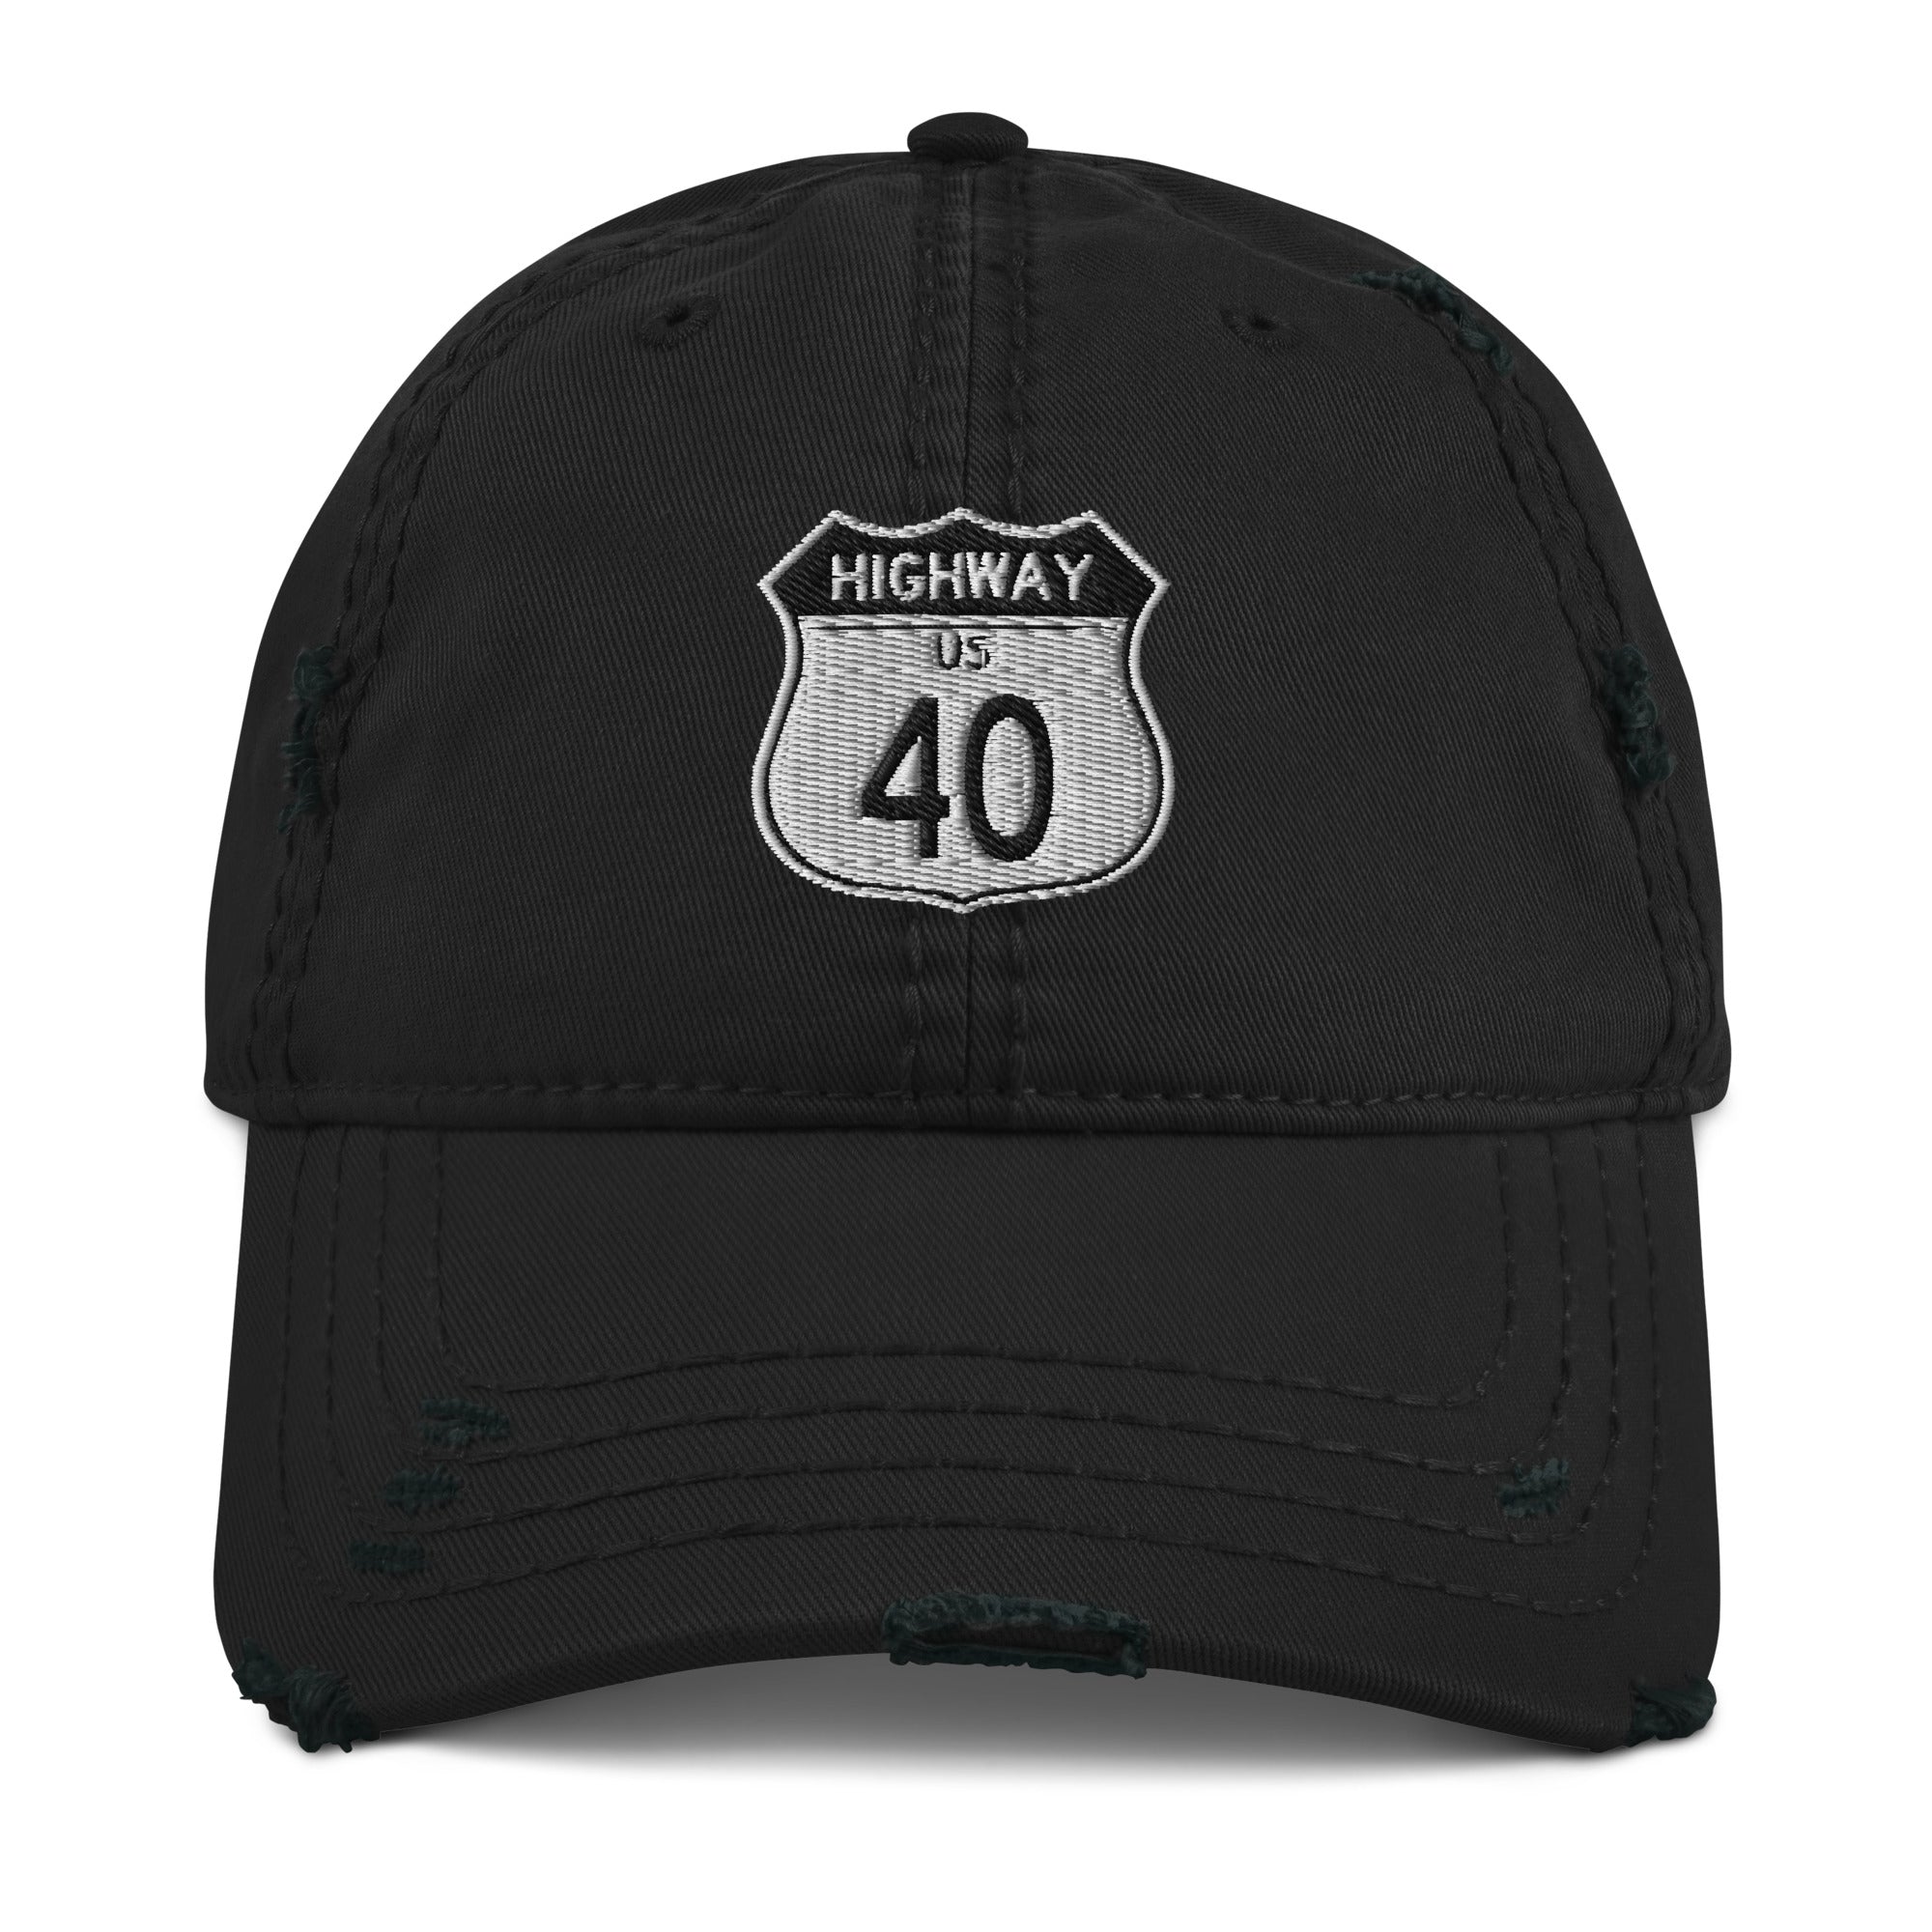 Highway 40 Distressed Dad Hat